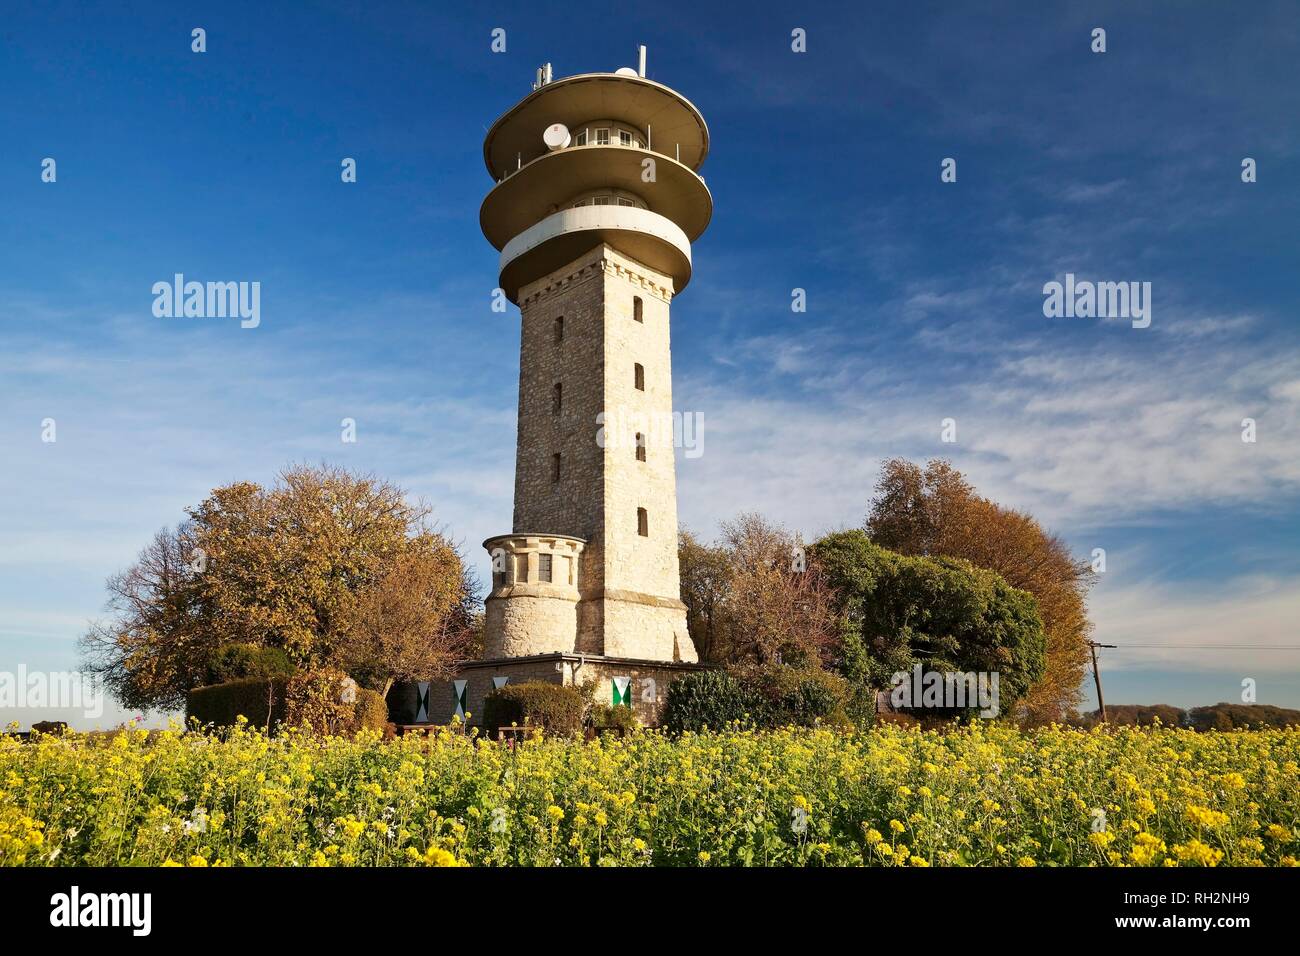 Longinus Tower on the Westerberg, Baumberge, Nottuln, Münsterland, North Rhine-Westphalia, Germany Stock Photo